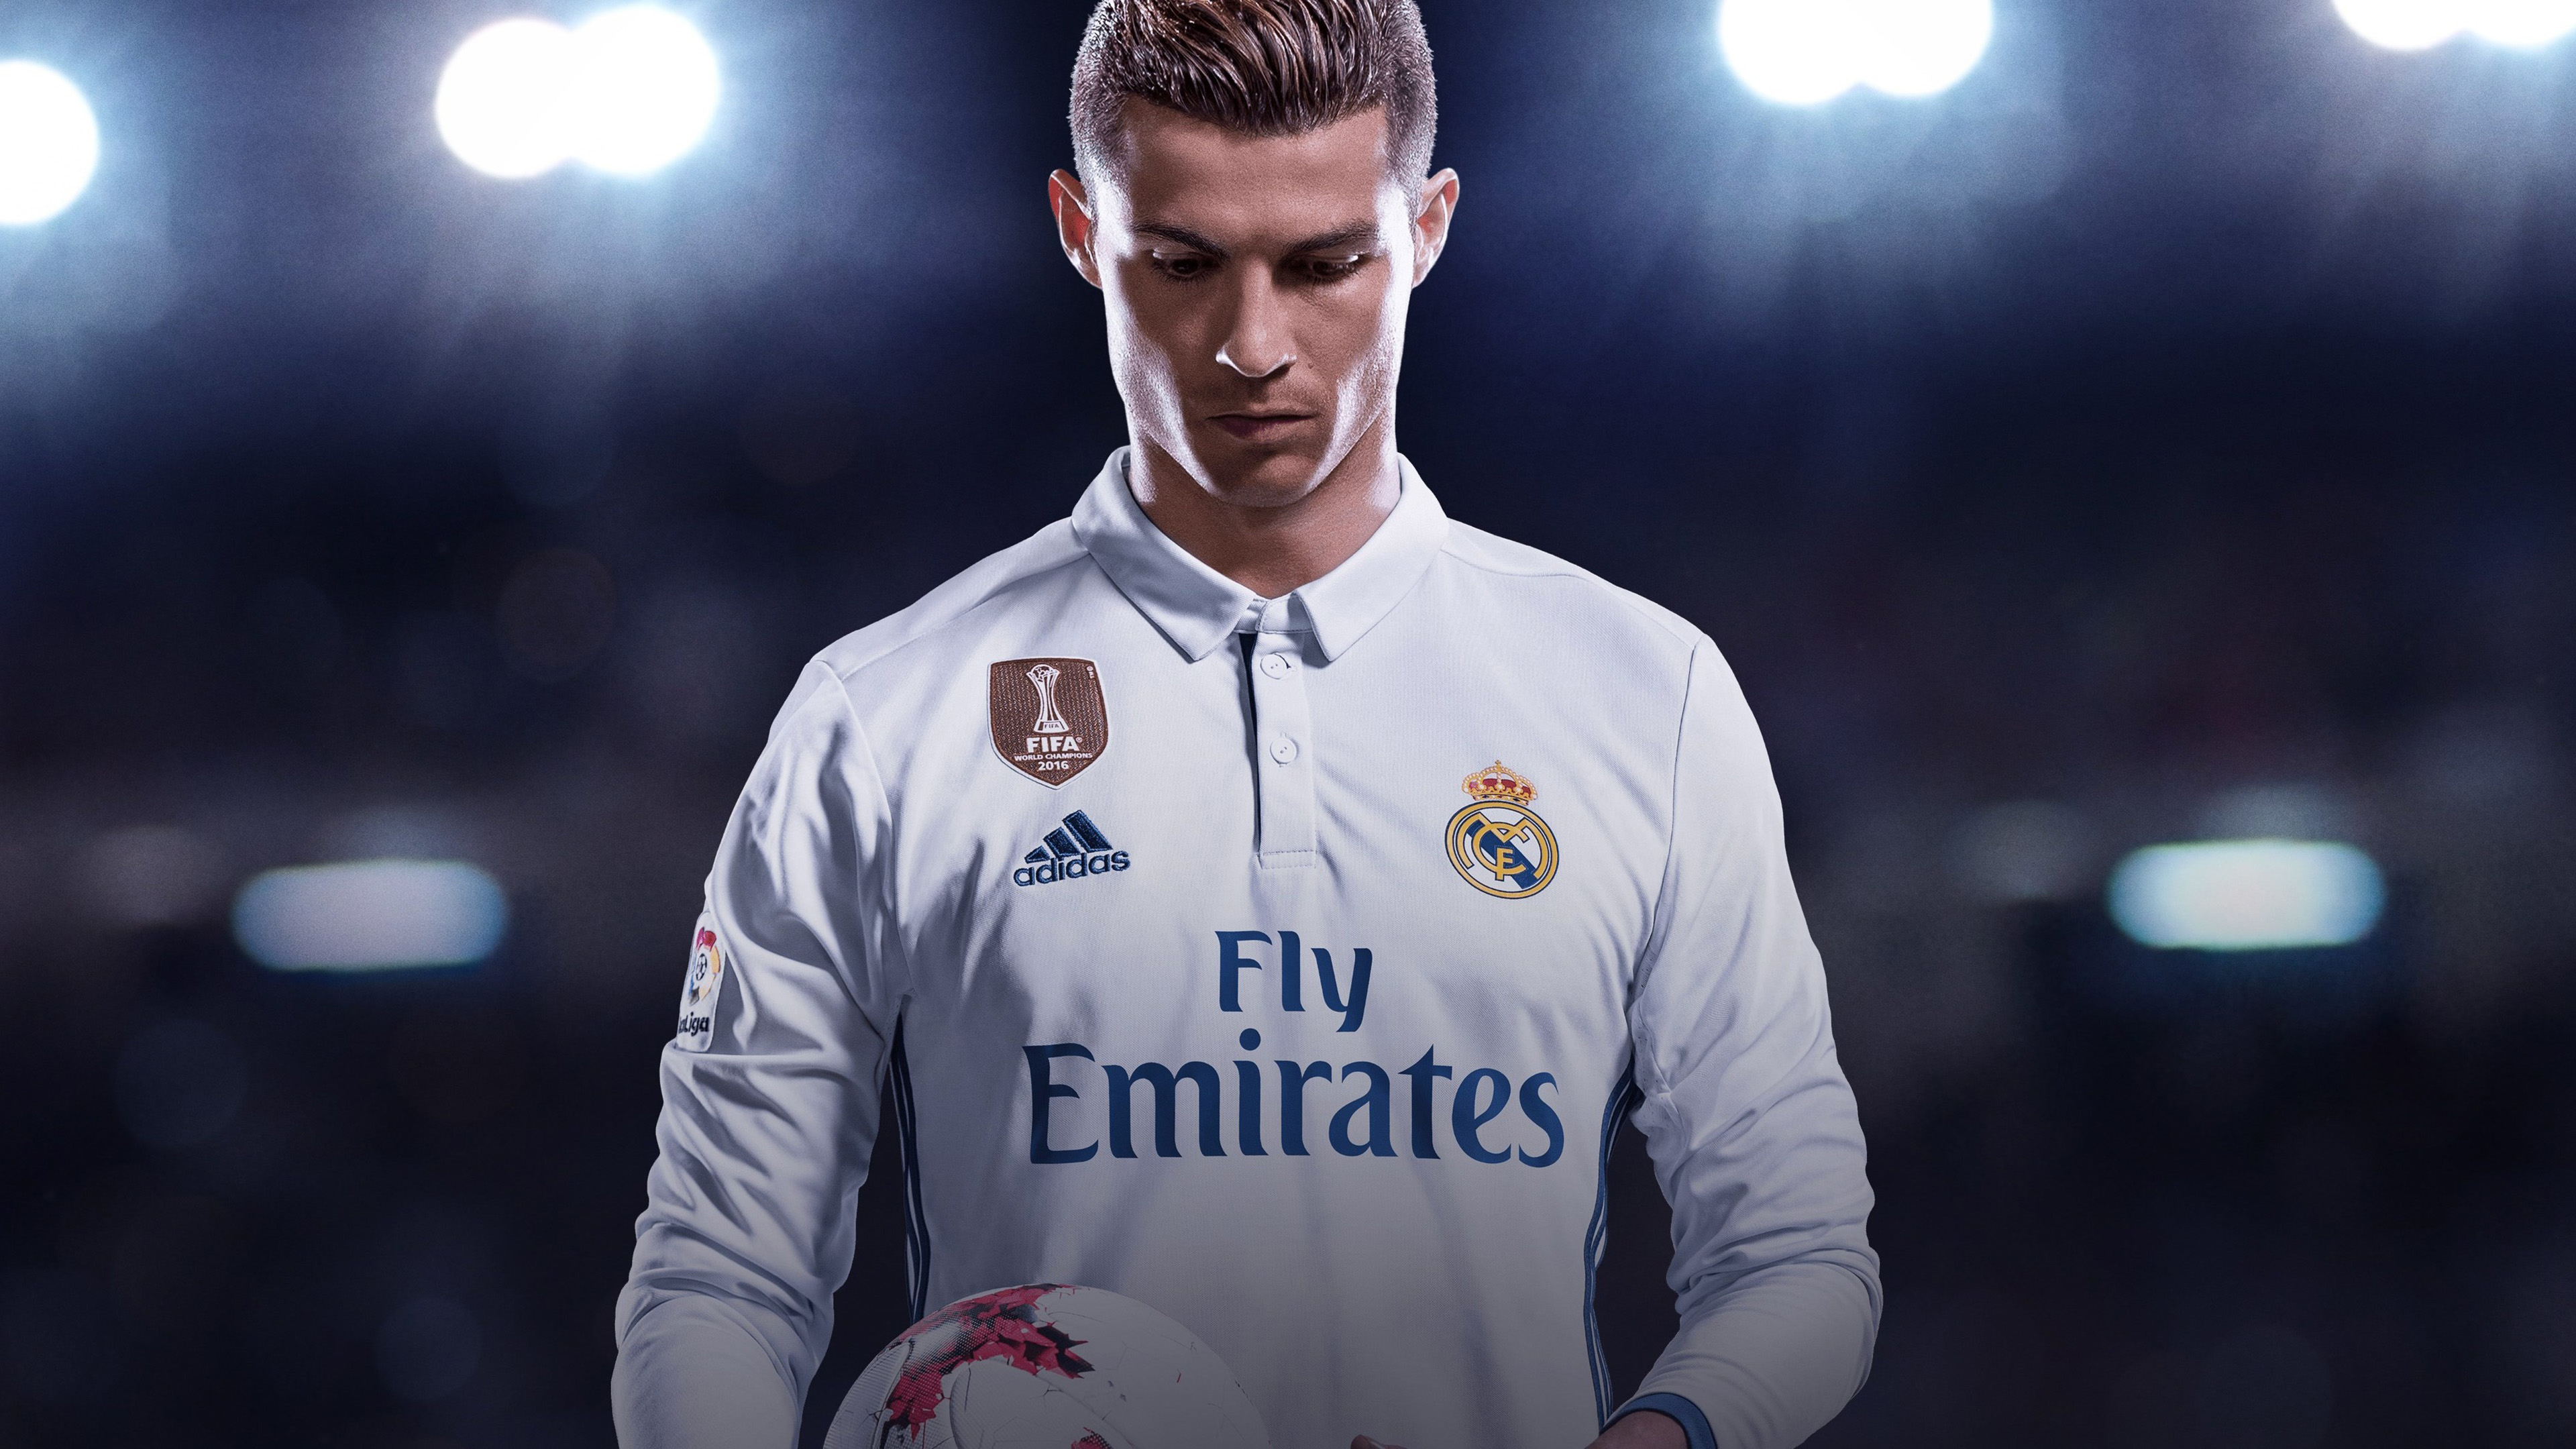 Ronaldo In Real Madrid Wallpaper Download  MobCup